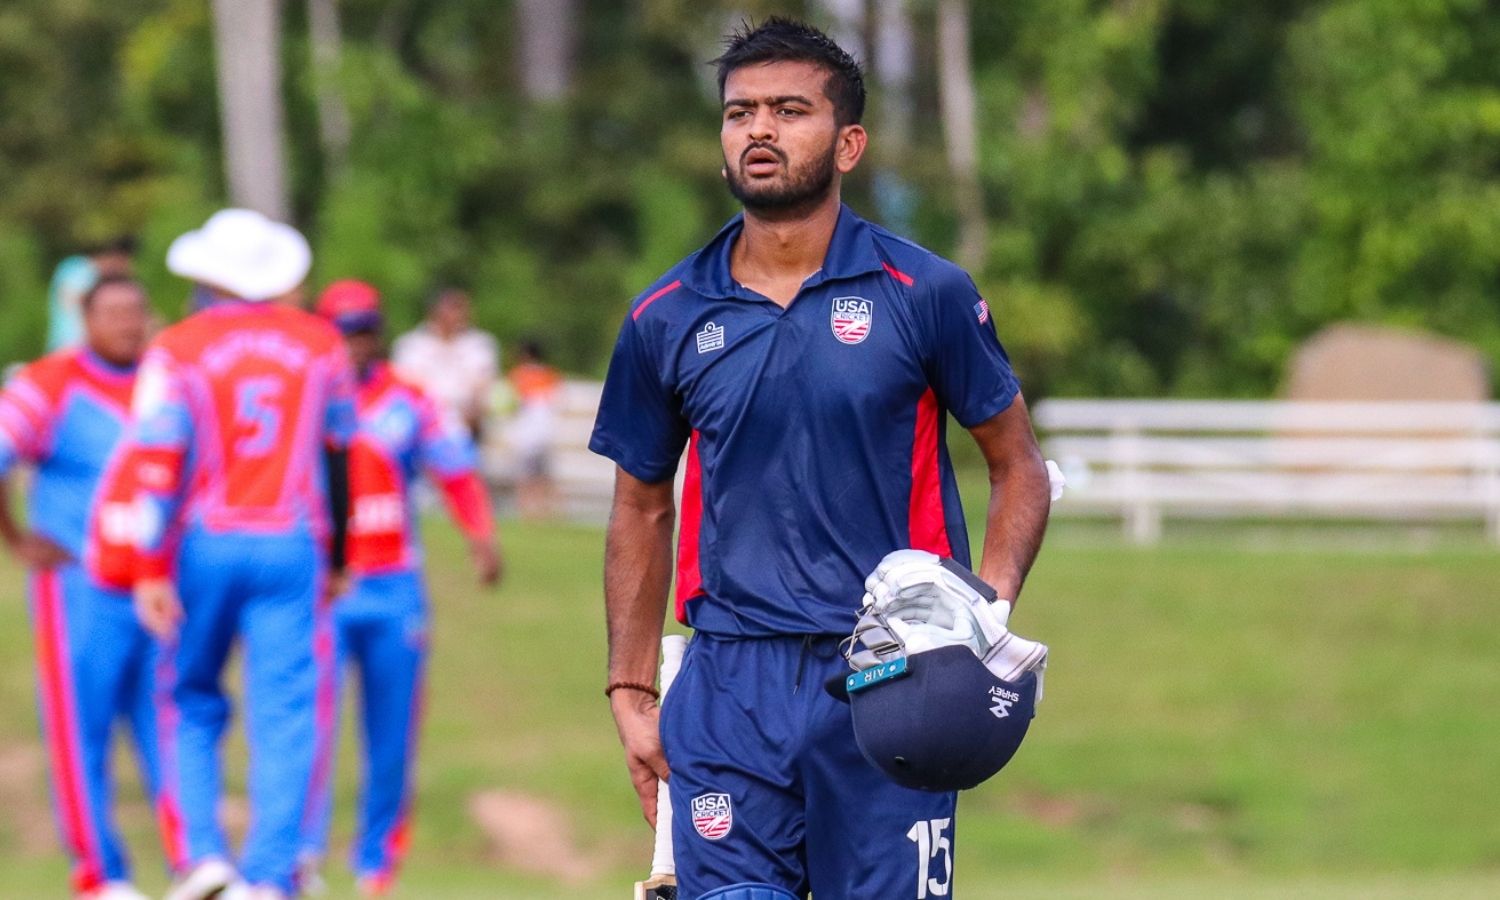 Monank Patel to lead USA Cricket T20 men’s team against Canada